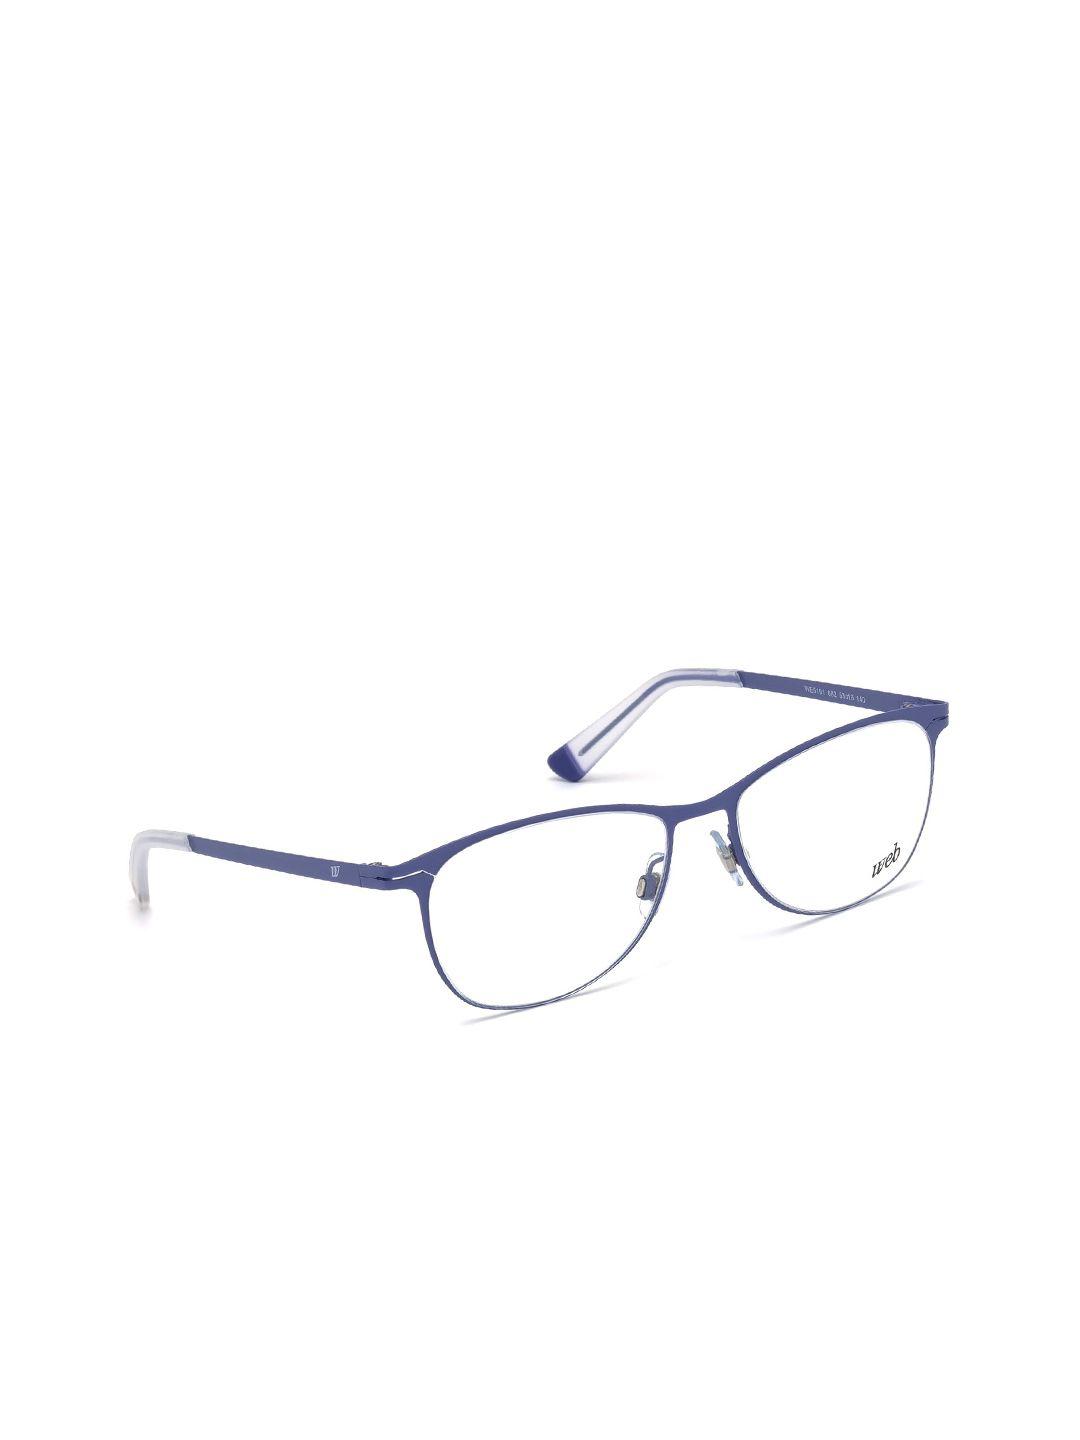 web eyewear women blue & transparent full rim oval frames we5191 53 082